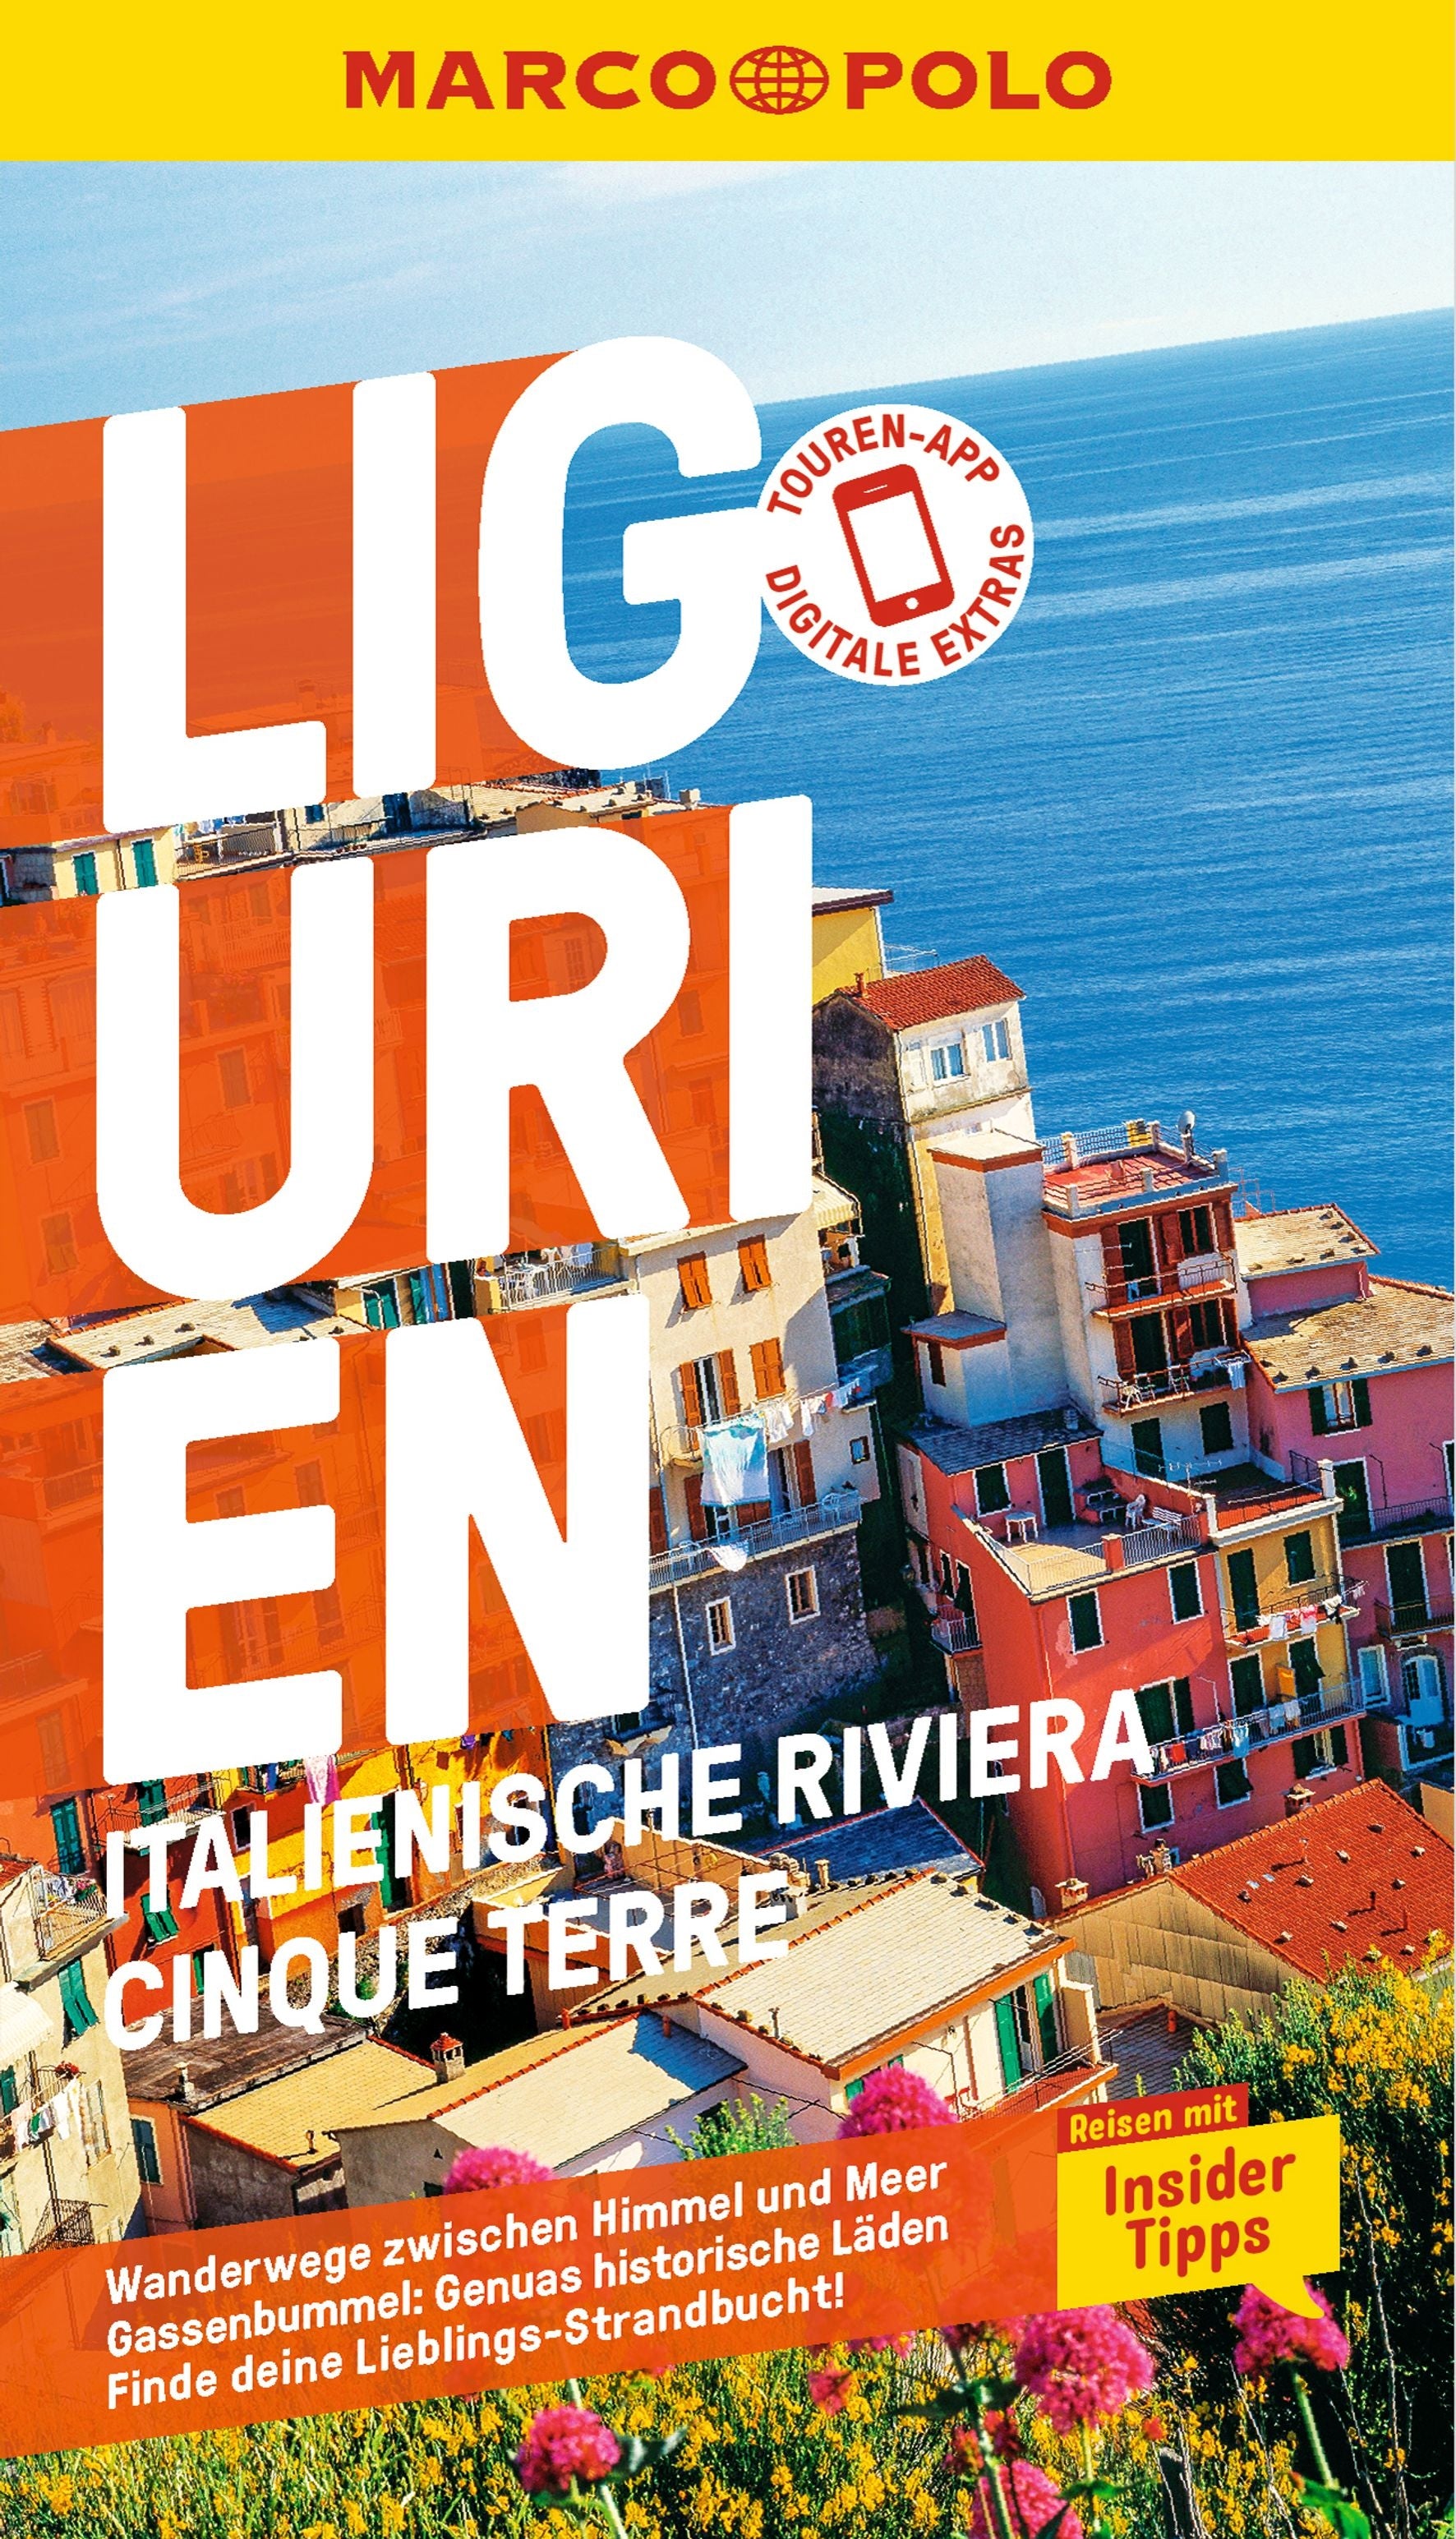 Ligurien, Italienische Riviera, Cinque Terre, Genua - MARCO POLO Reiseführe